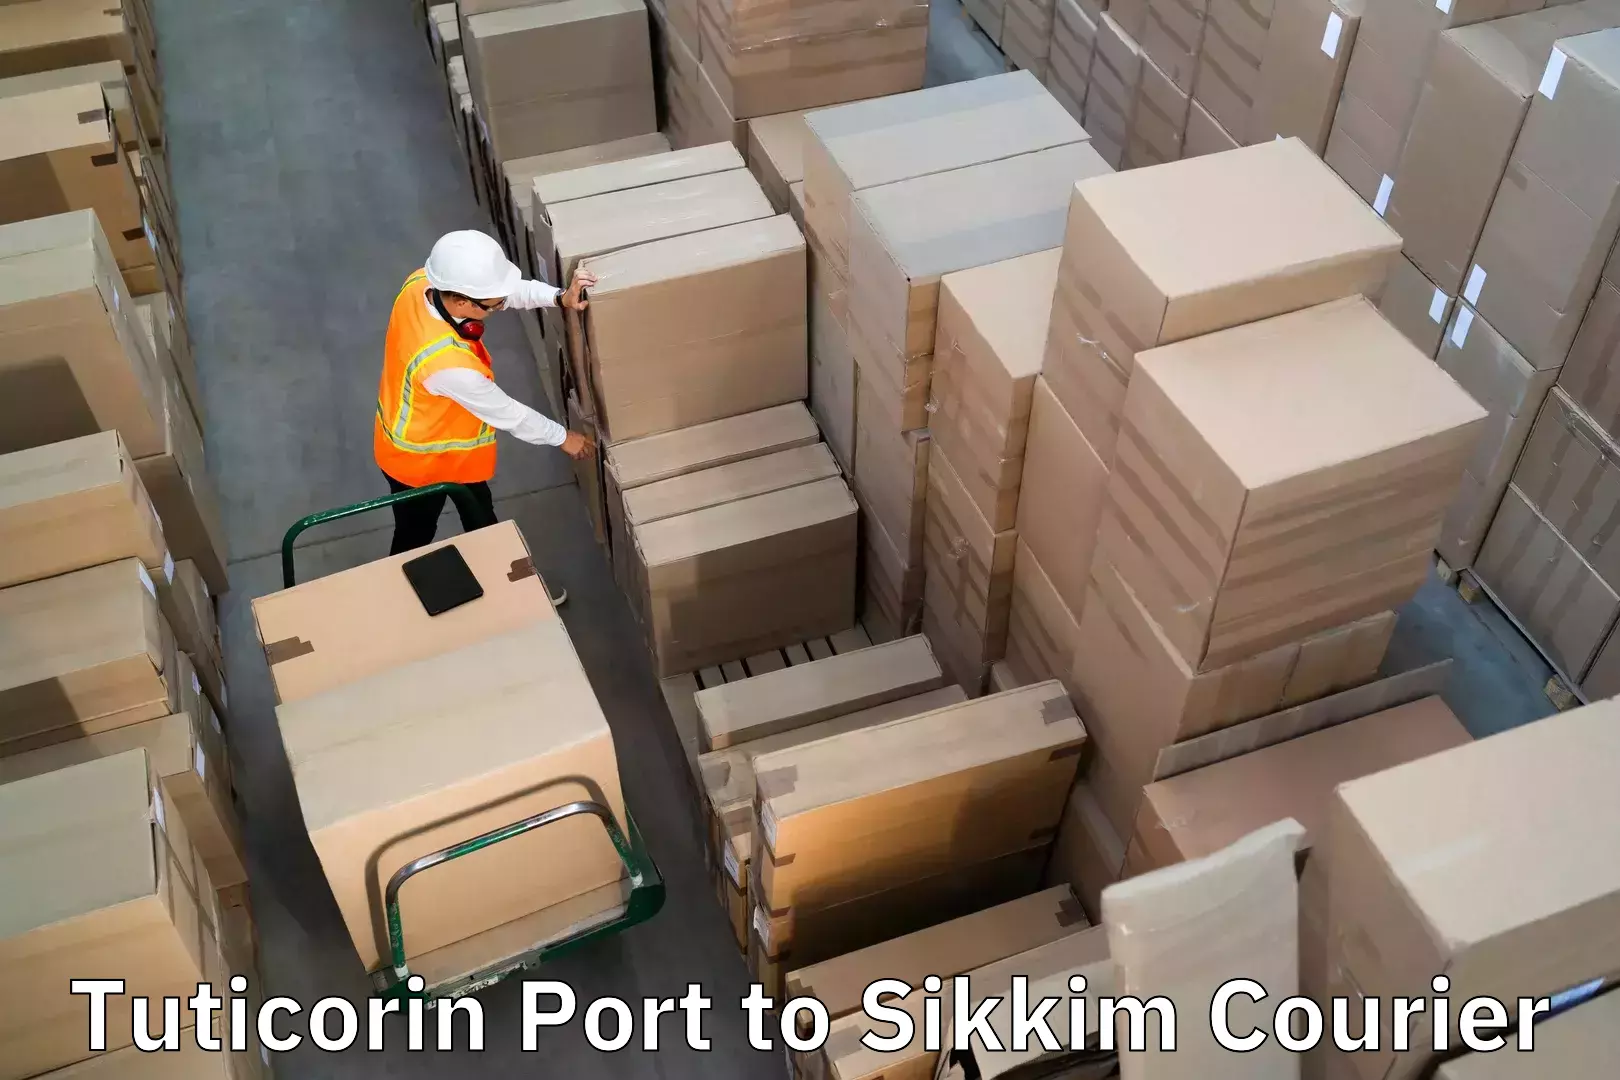 Luggage transport company Tuticorin Port to East Sikkim